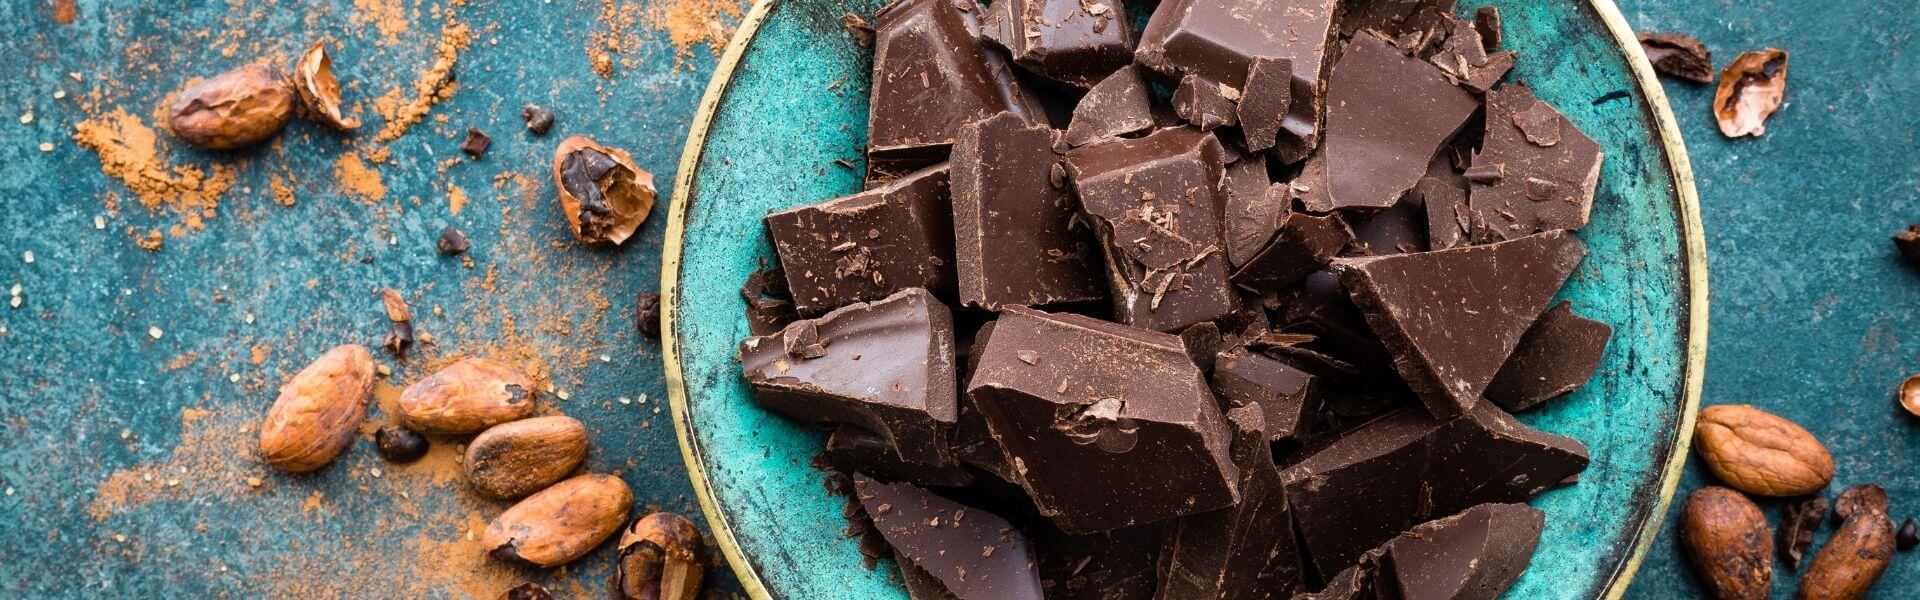 Chocolaterie - Best Chocolates